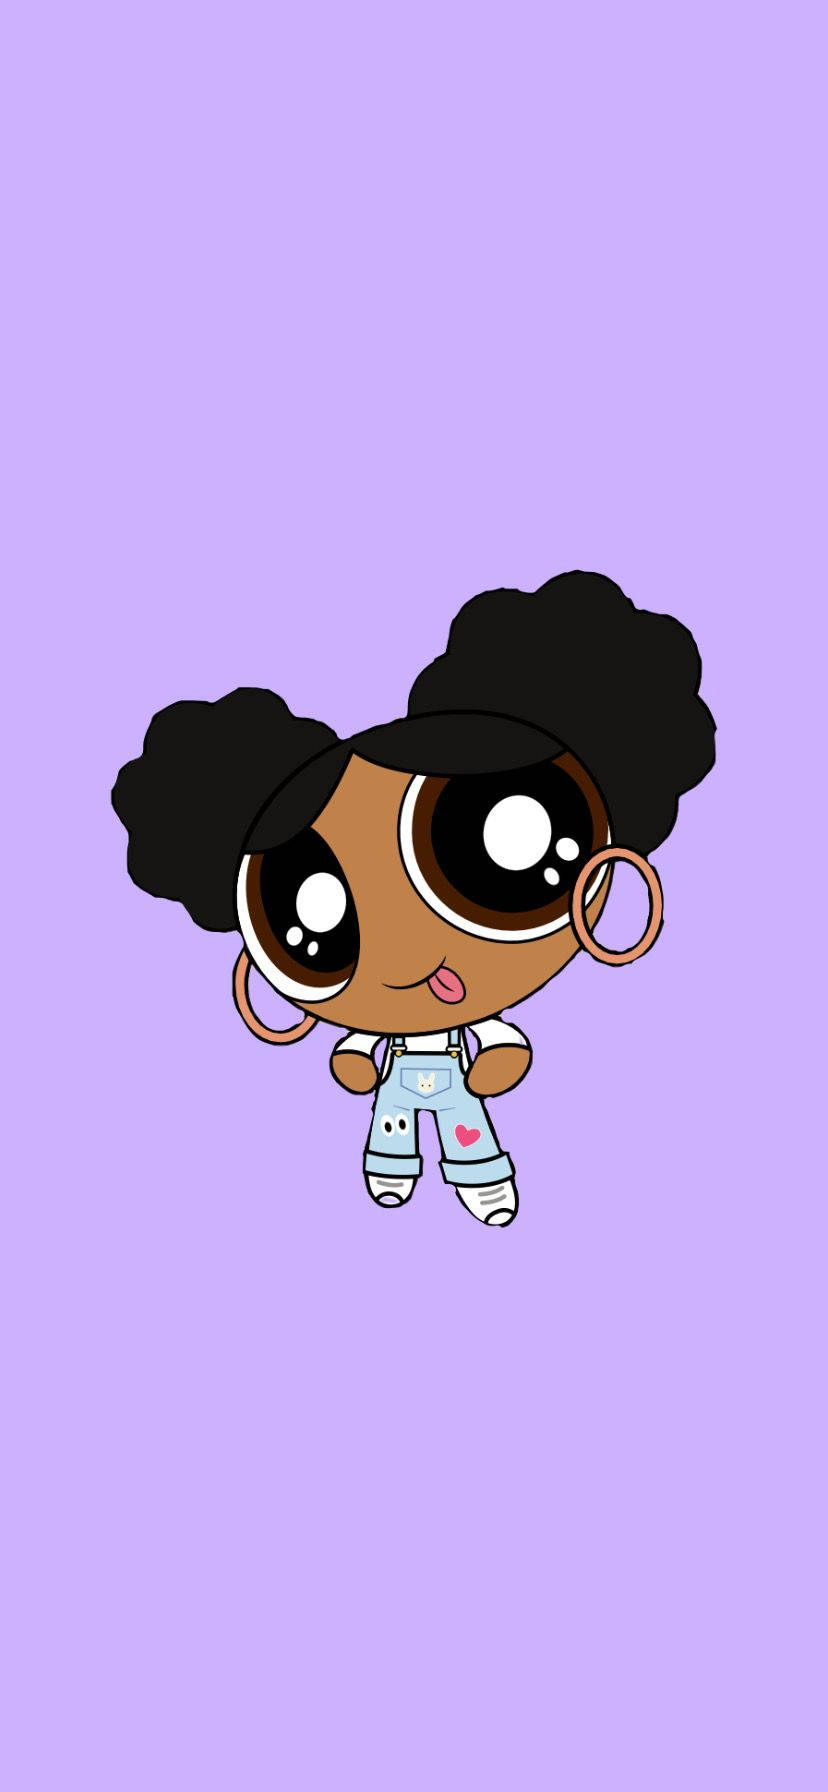 A Joyful Black Girl Cartoon Character